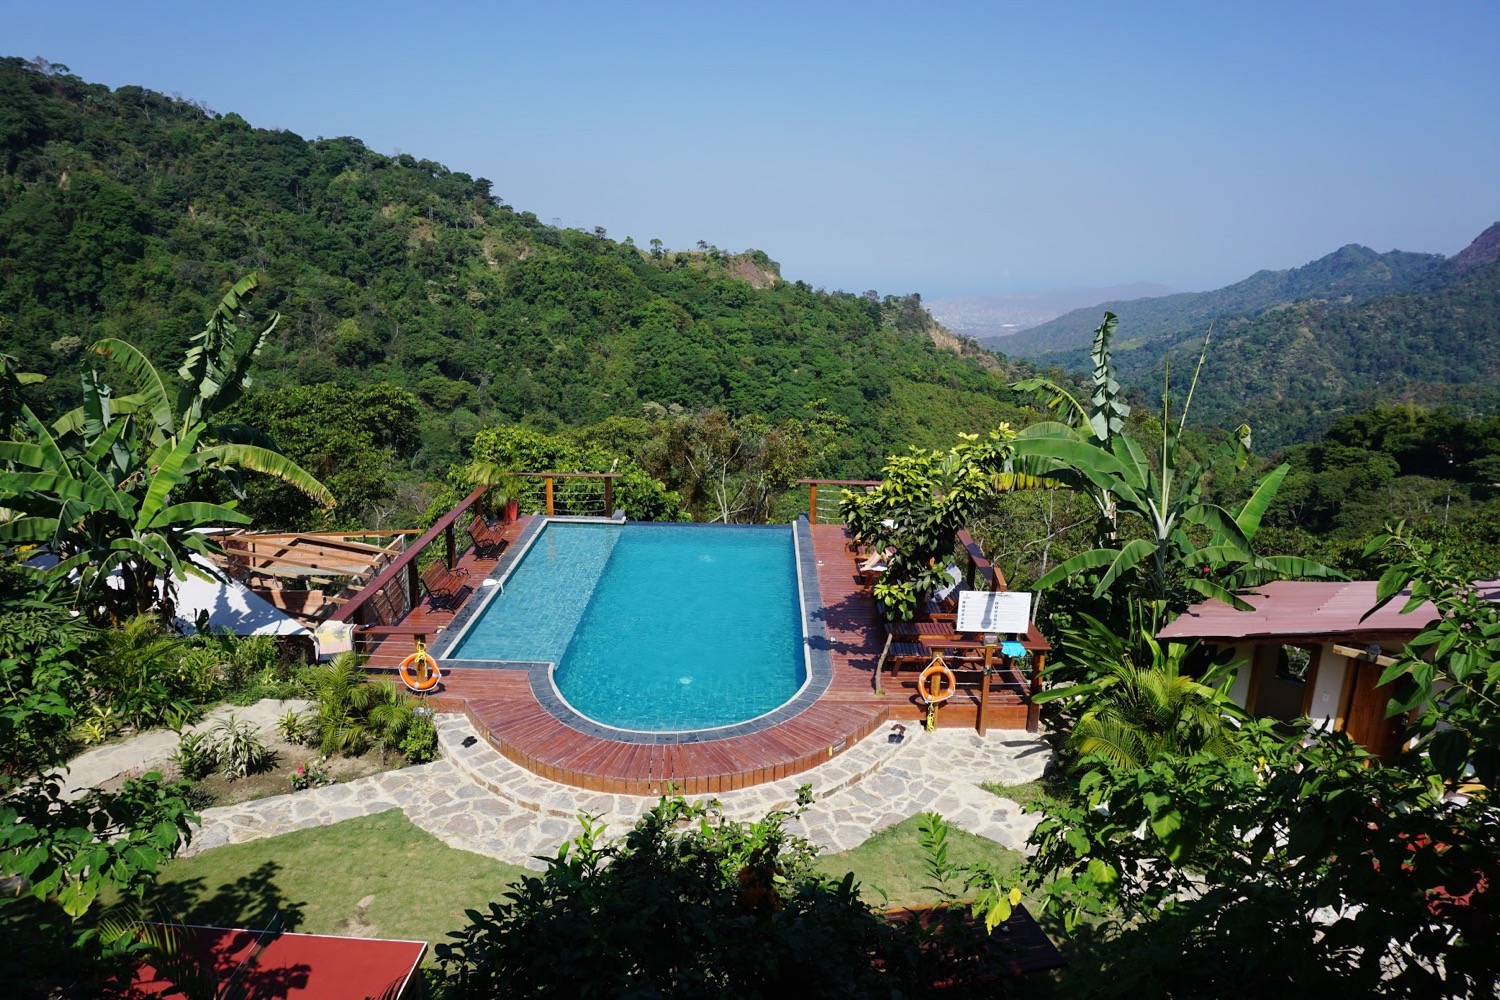 Casa Viejas Swimming Pool & View, Minca, Colombia